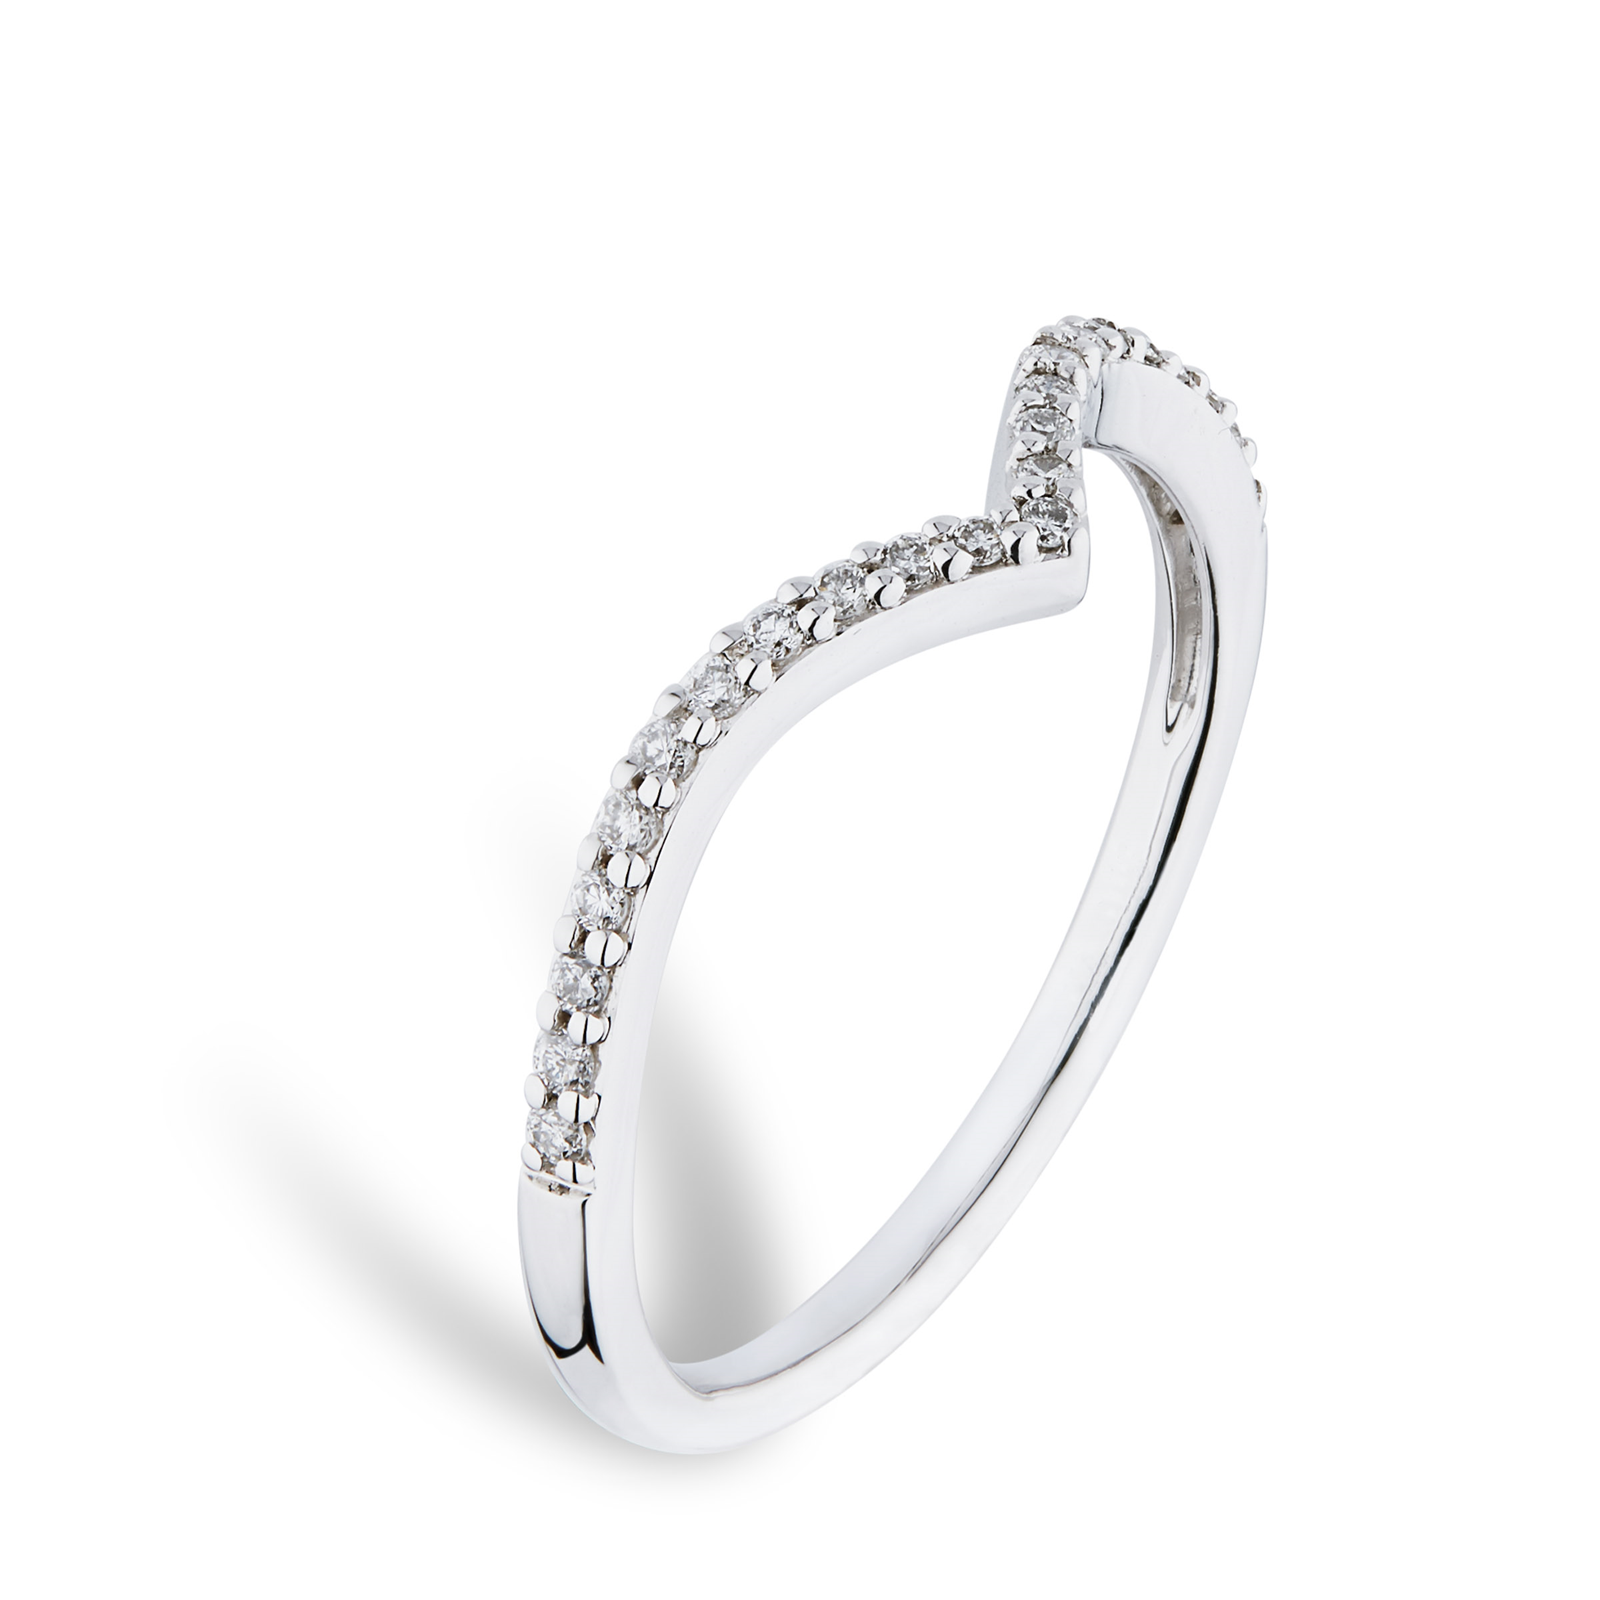 V shaped white gold wedding ring